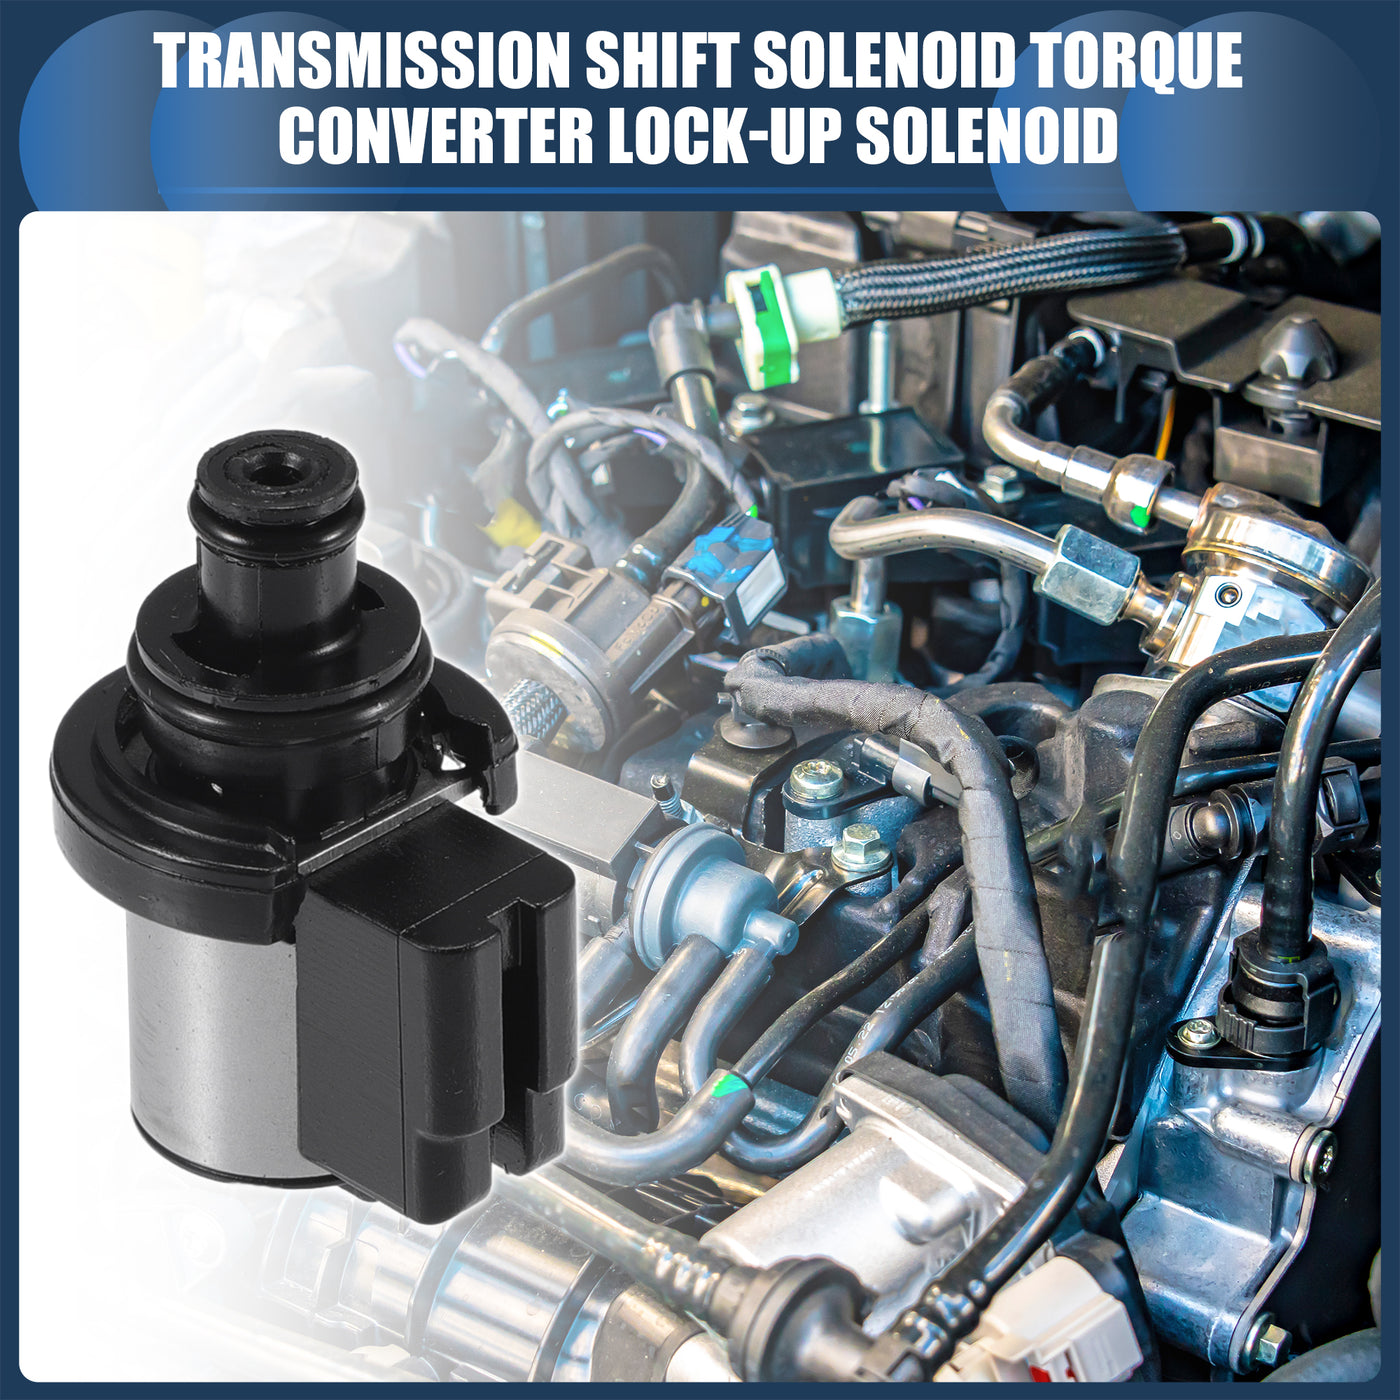 INFINAUTO Transmission Shift Solenoid Torque Converter Lock-Up Solenoid, No.31706AA030 for Subaru Outback 2010-2017 Black, 1 Pc